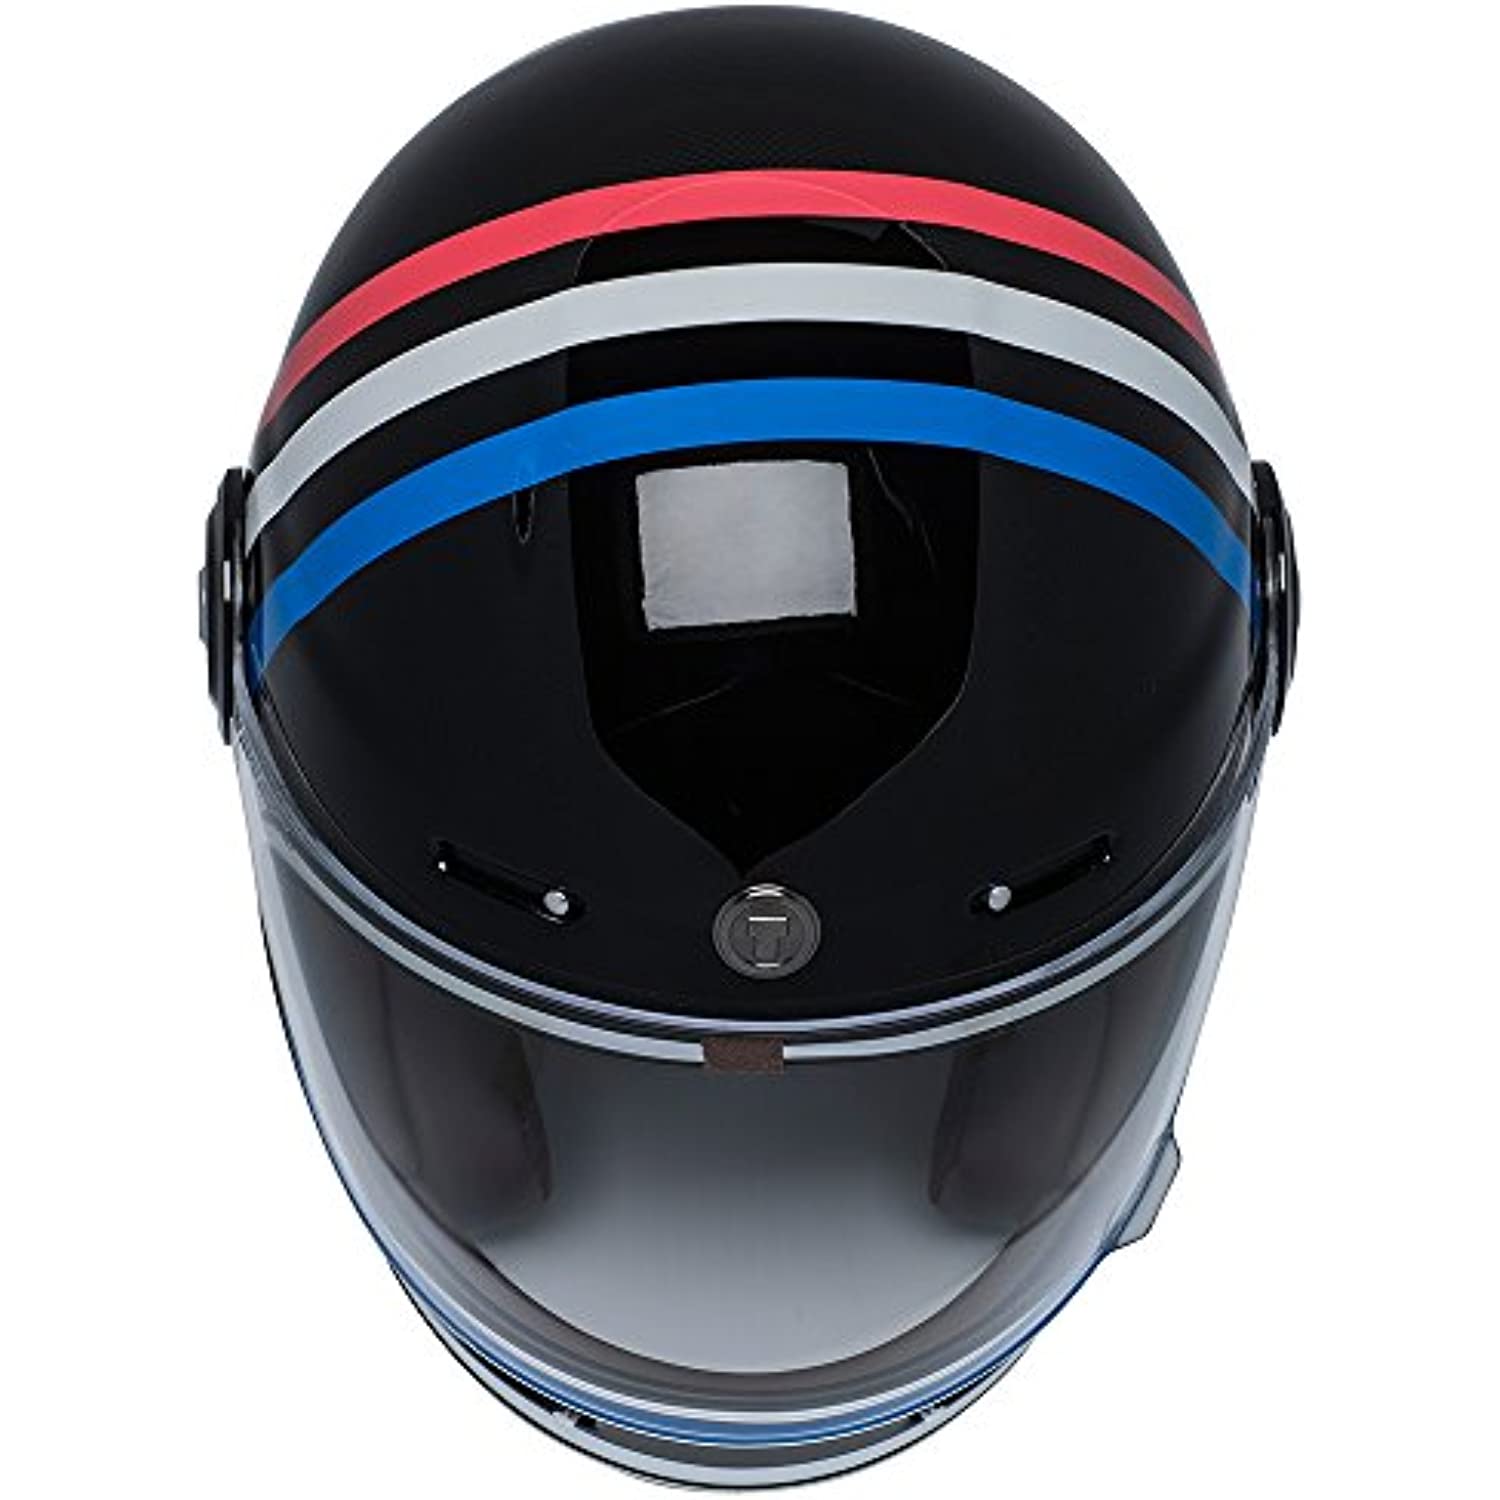 TORC T1 Unisex-Adult Retro Full face Motorcycle Helmet Tron Gloss Black, Large